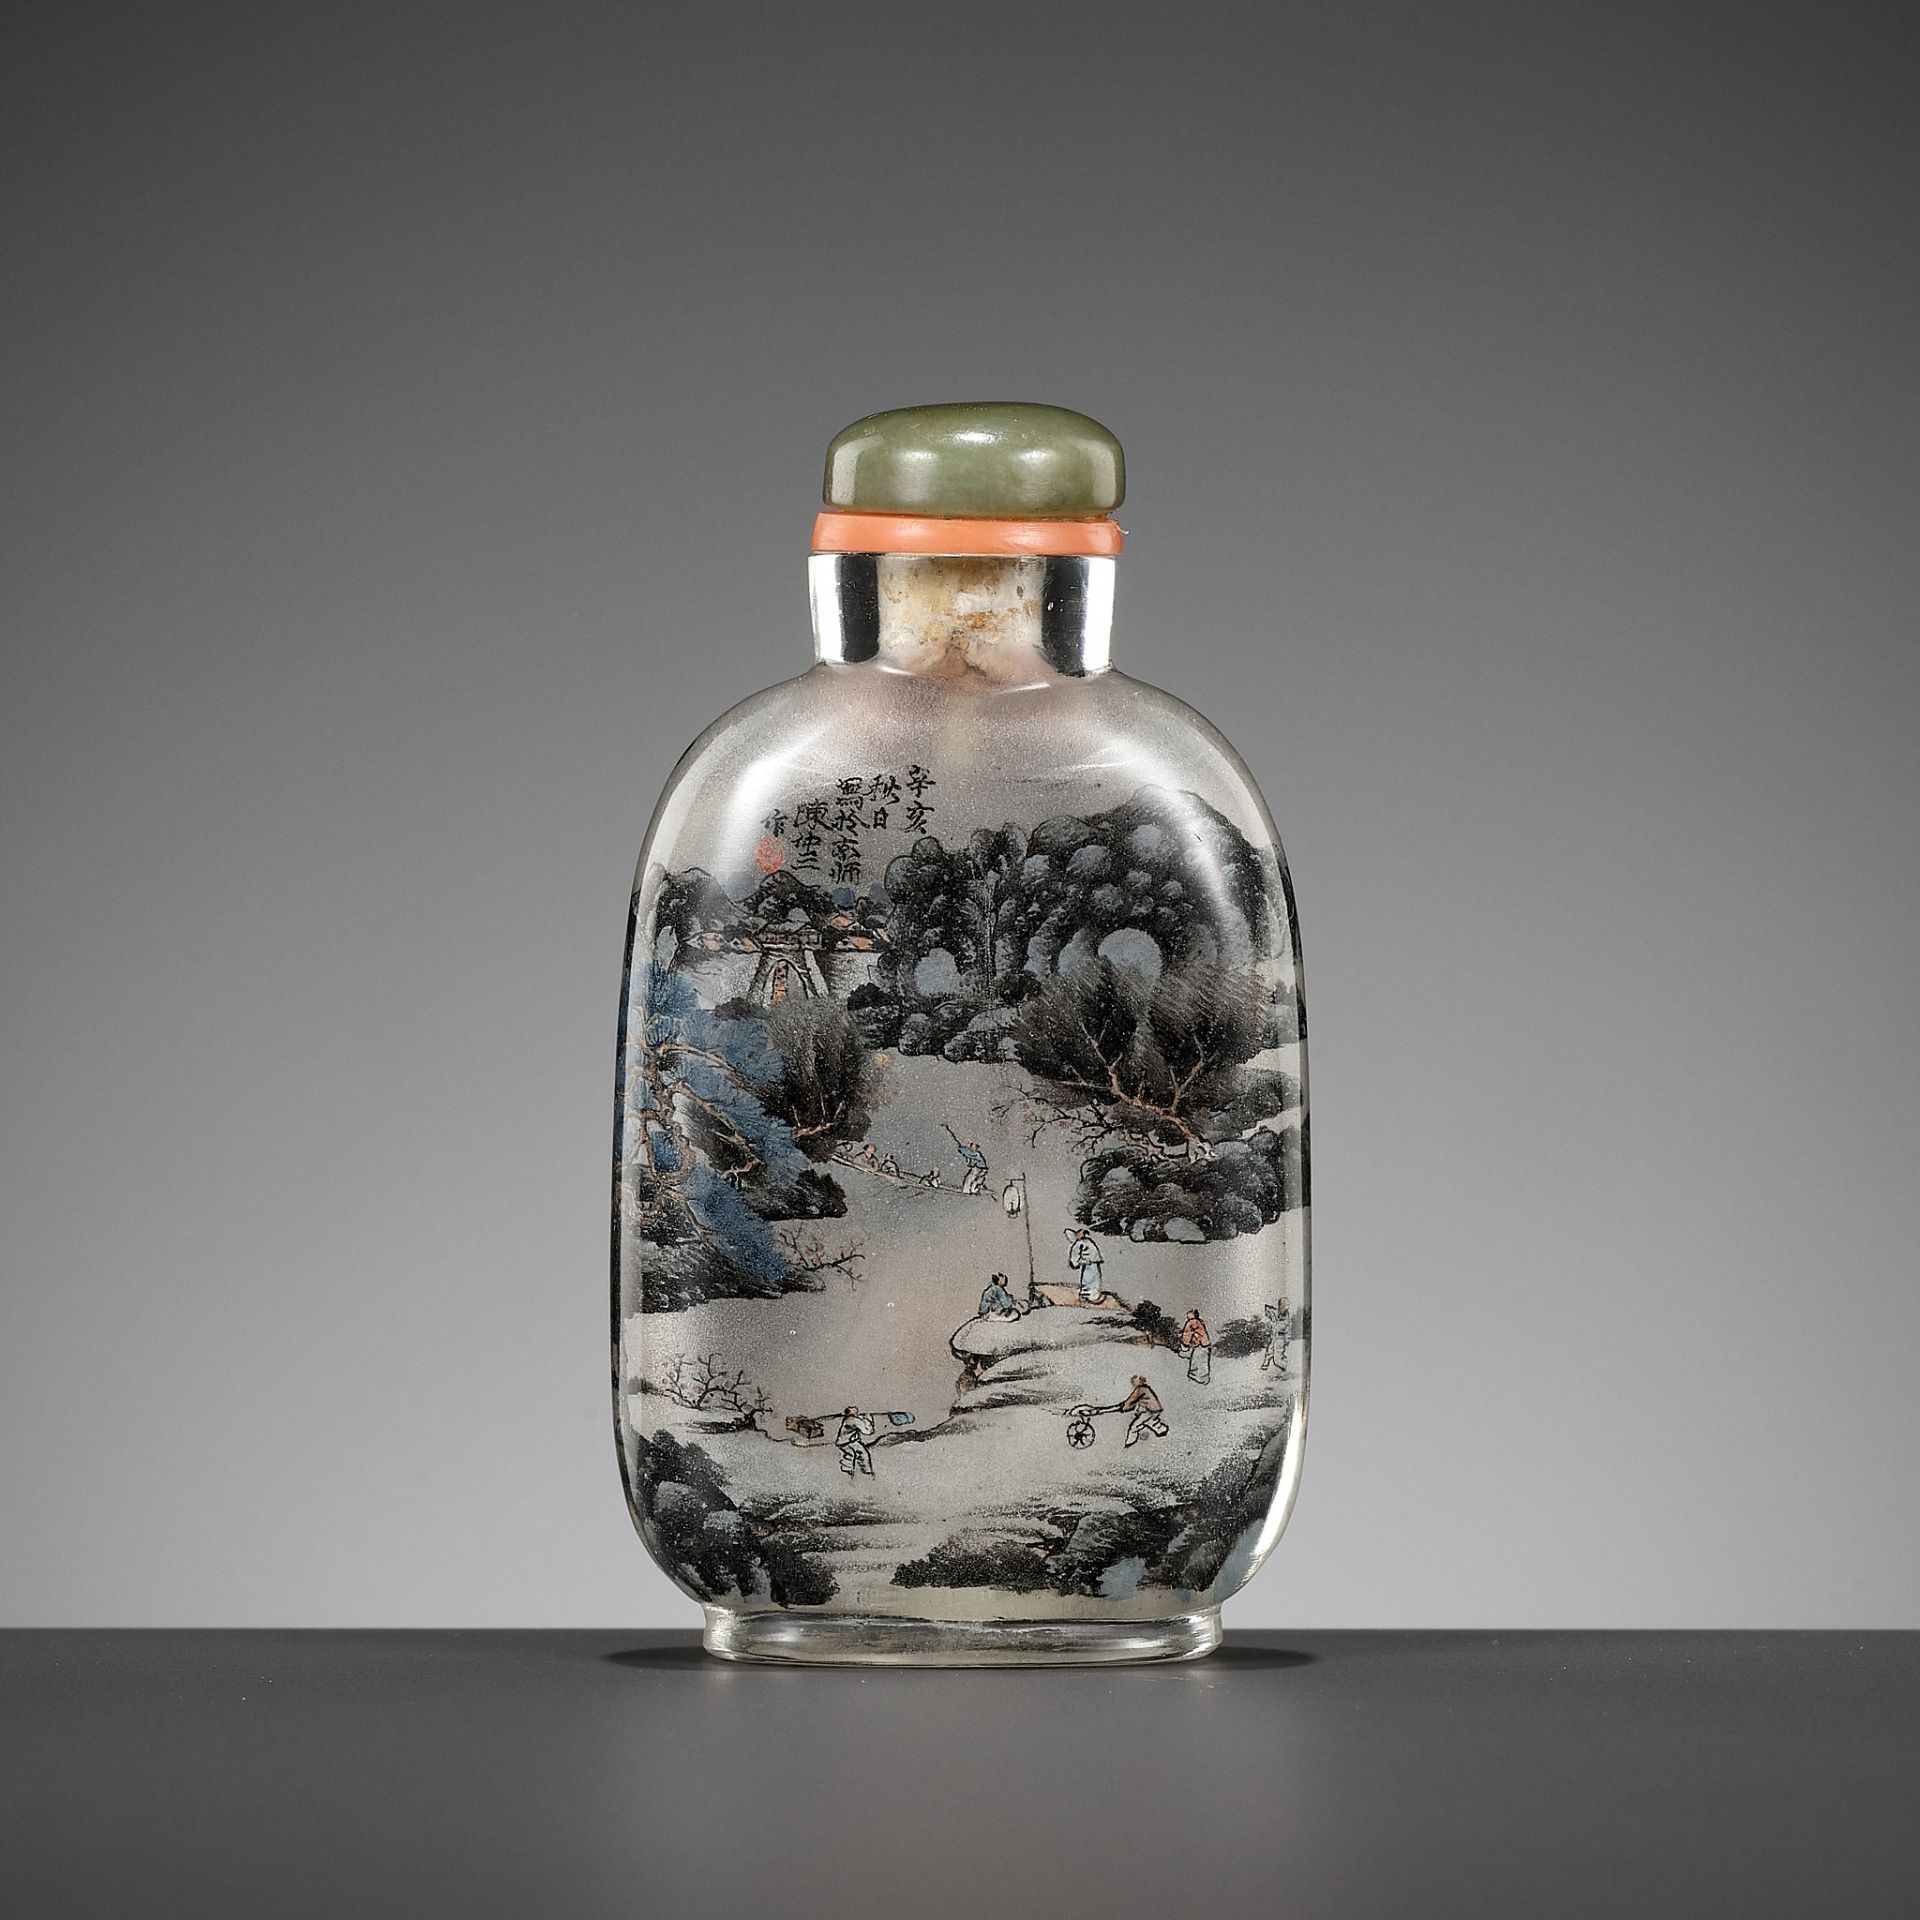 AN INSIDE-PAINTED GLASS SNUFF BOTTLE BY CHEN ZHONGSAN, DATED 1911